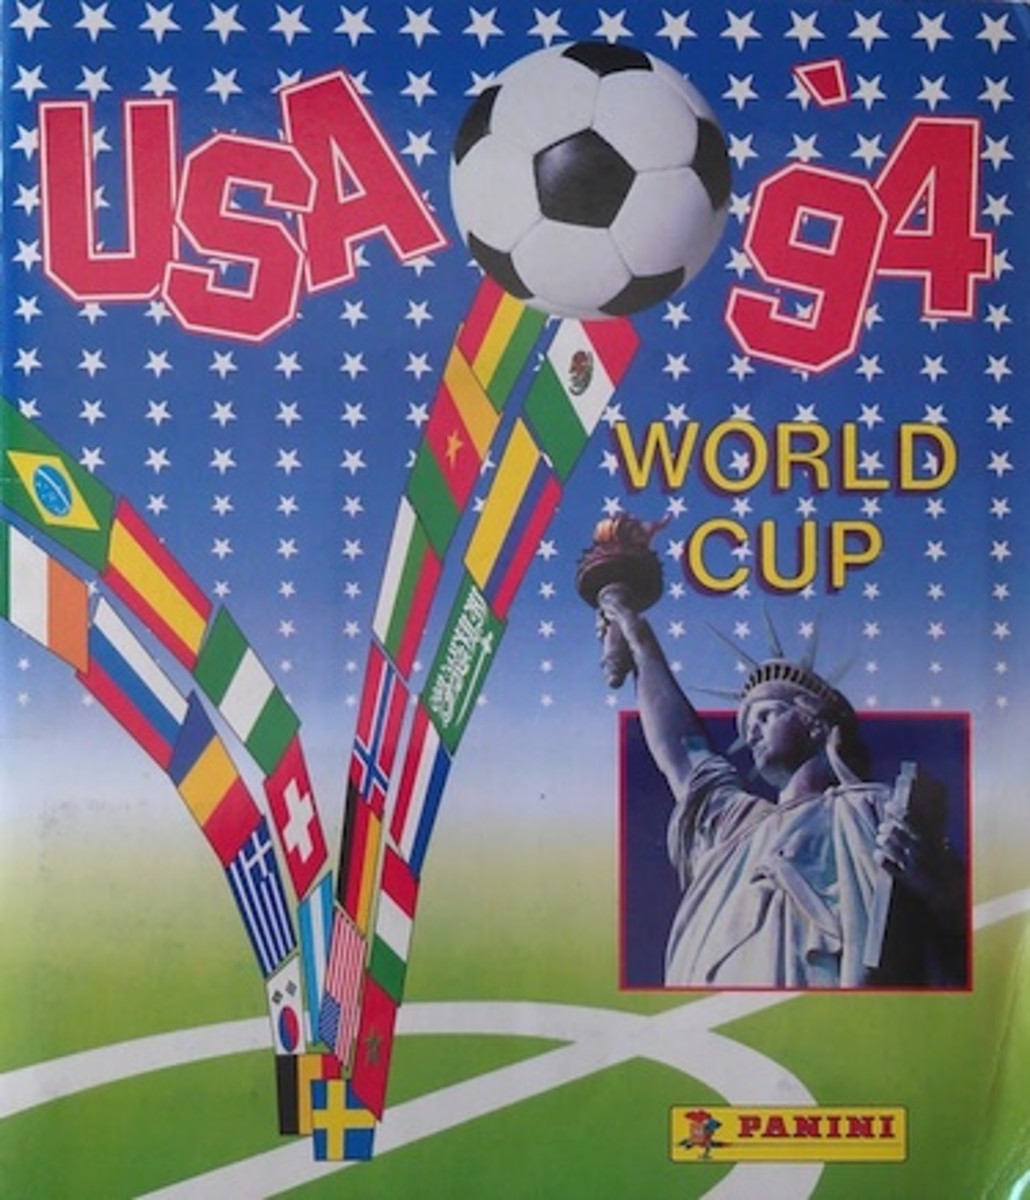 1994 Panini World Cup Sticker Album.